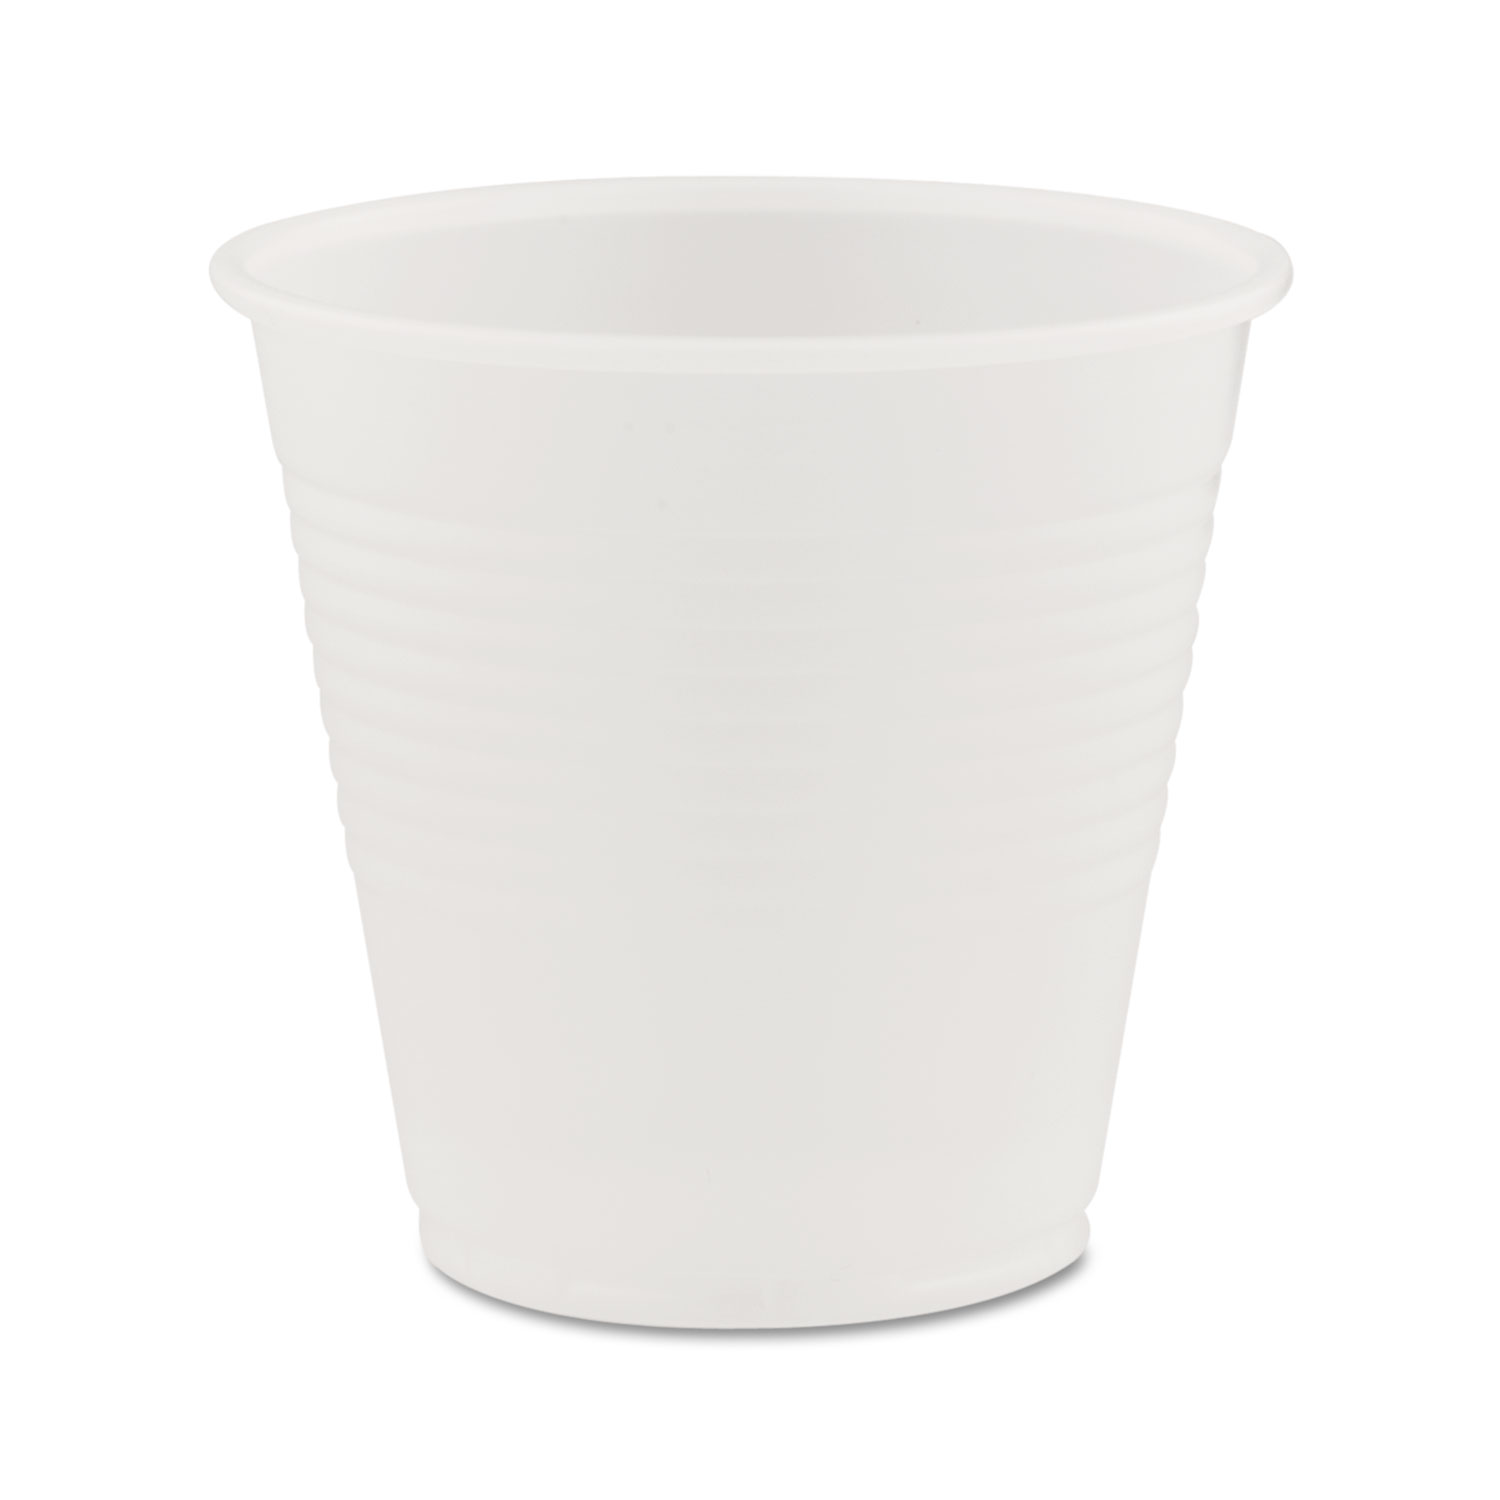 Conex Galaxy Polystyrene Plastic Cold Cups, 5oz, 100 Sleeve, 25 Sleeves/Carton